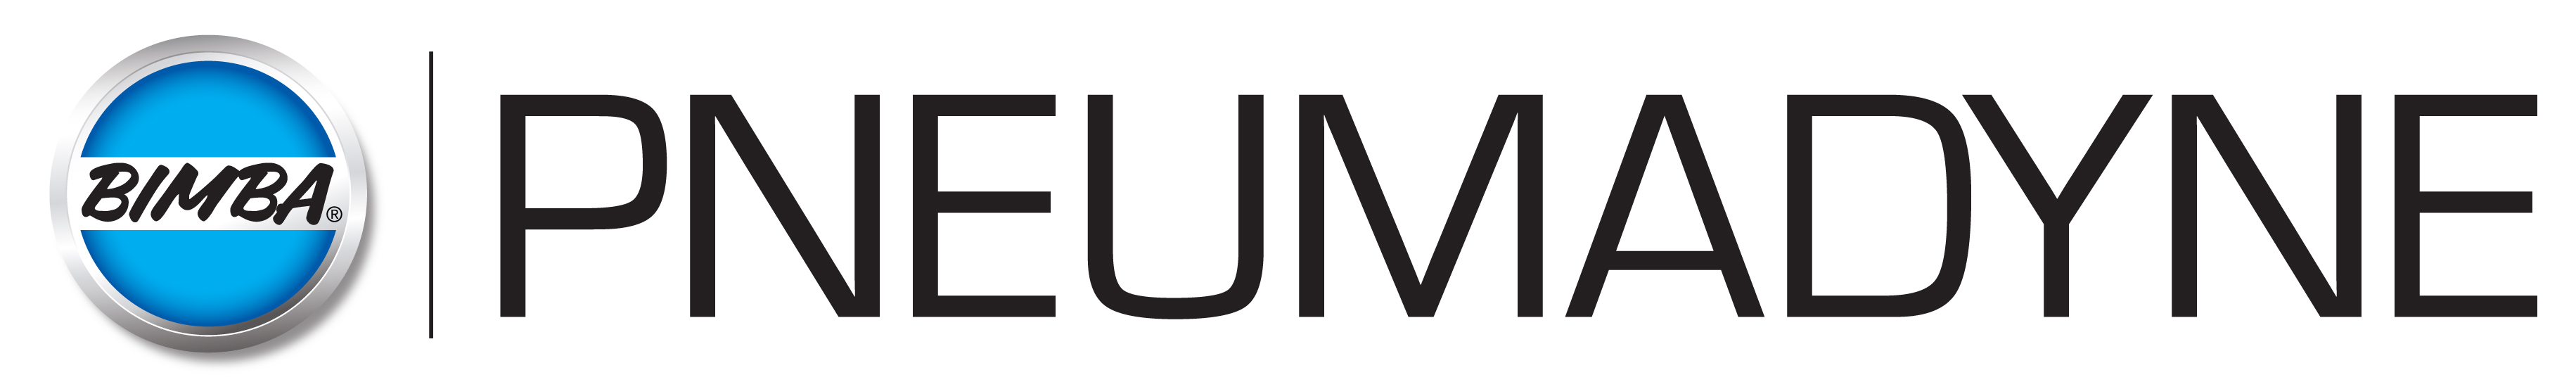 Pneumadyne_Logo